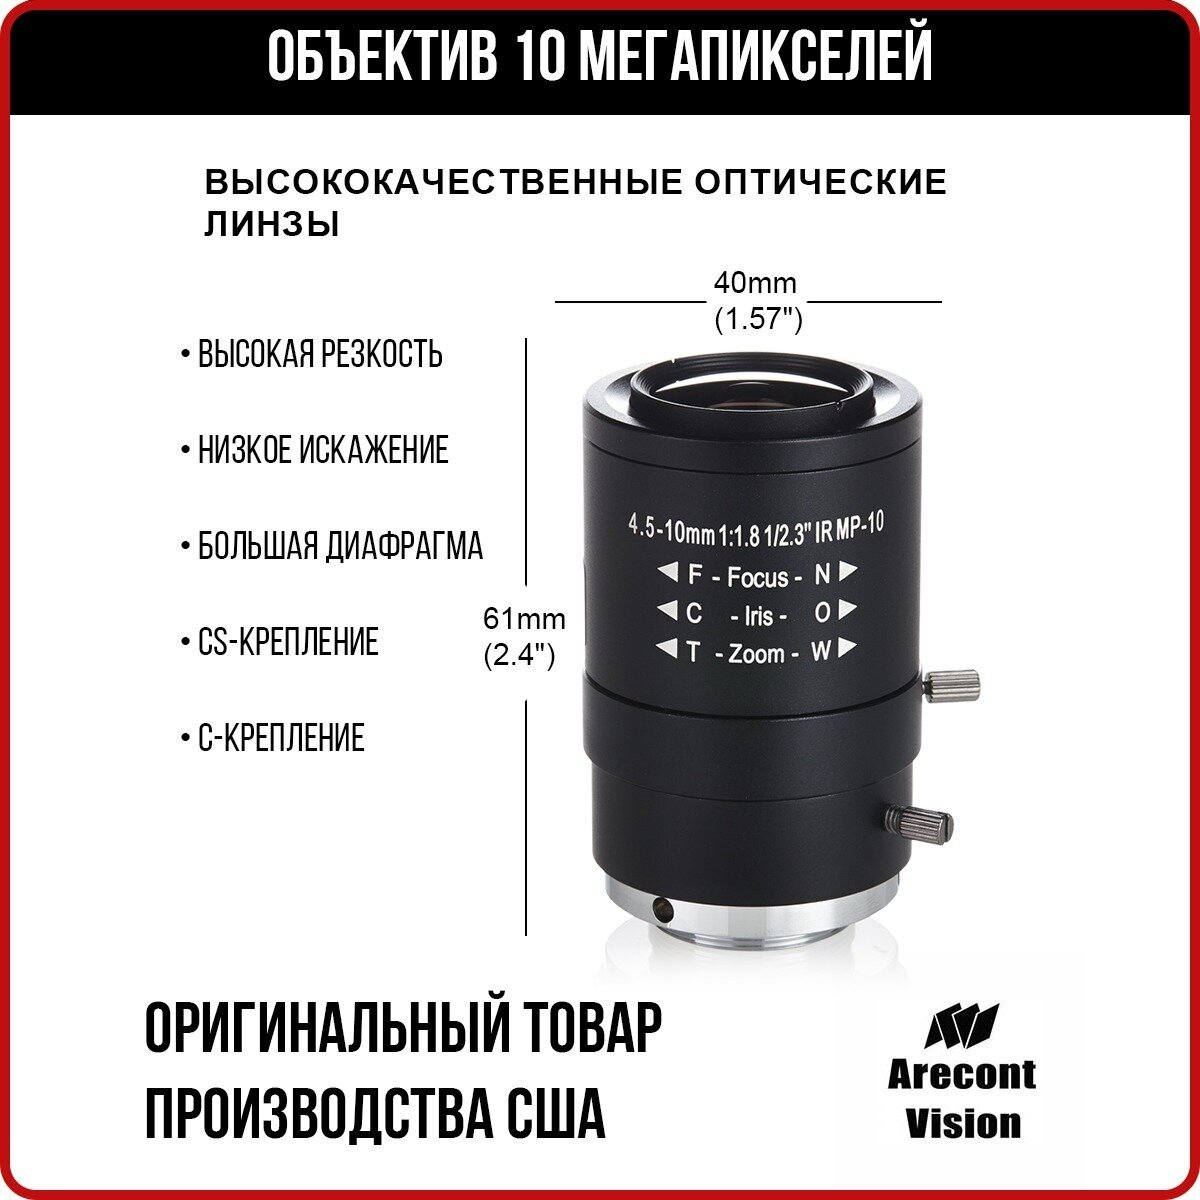 Объектив Arecont Vision Delax Market 10 mpix UHD 45-10 mm 1/23" черный